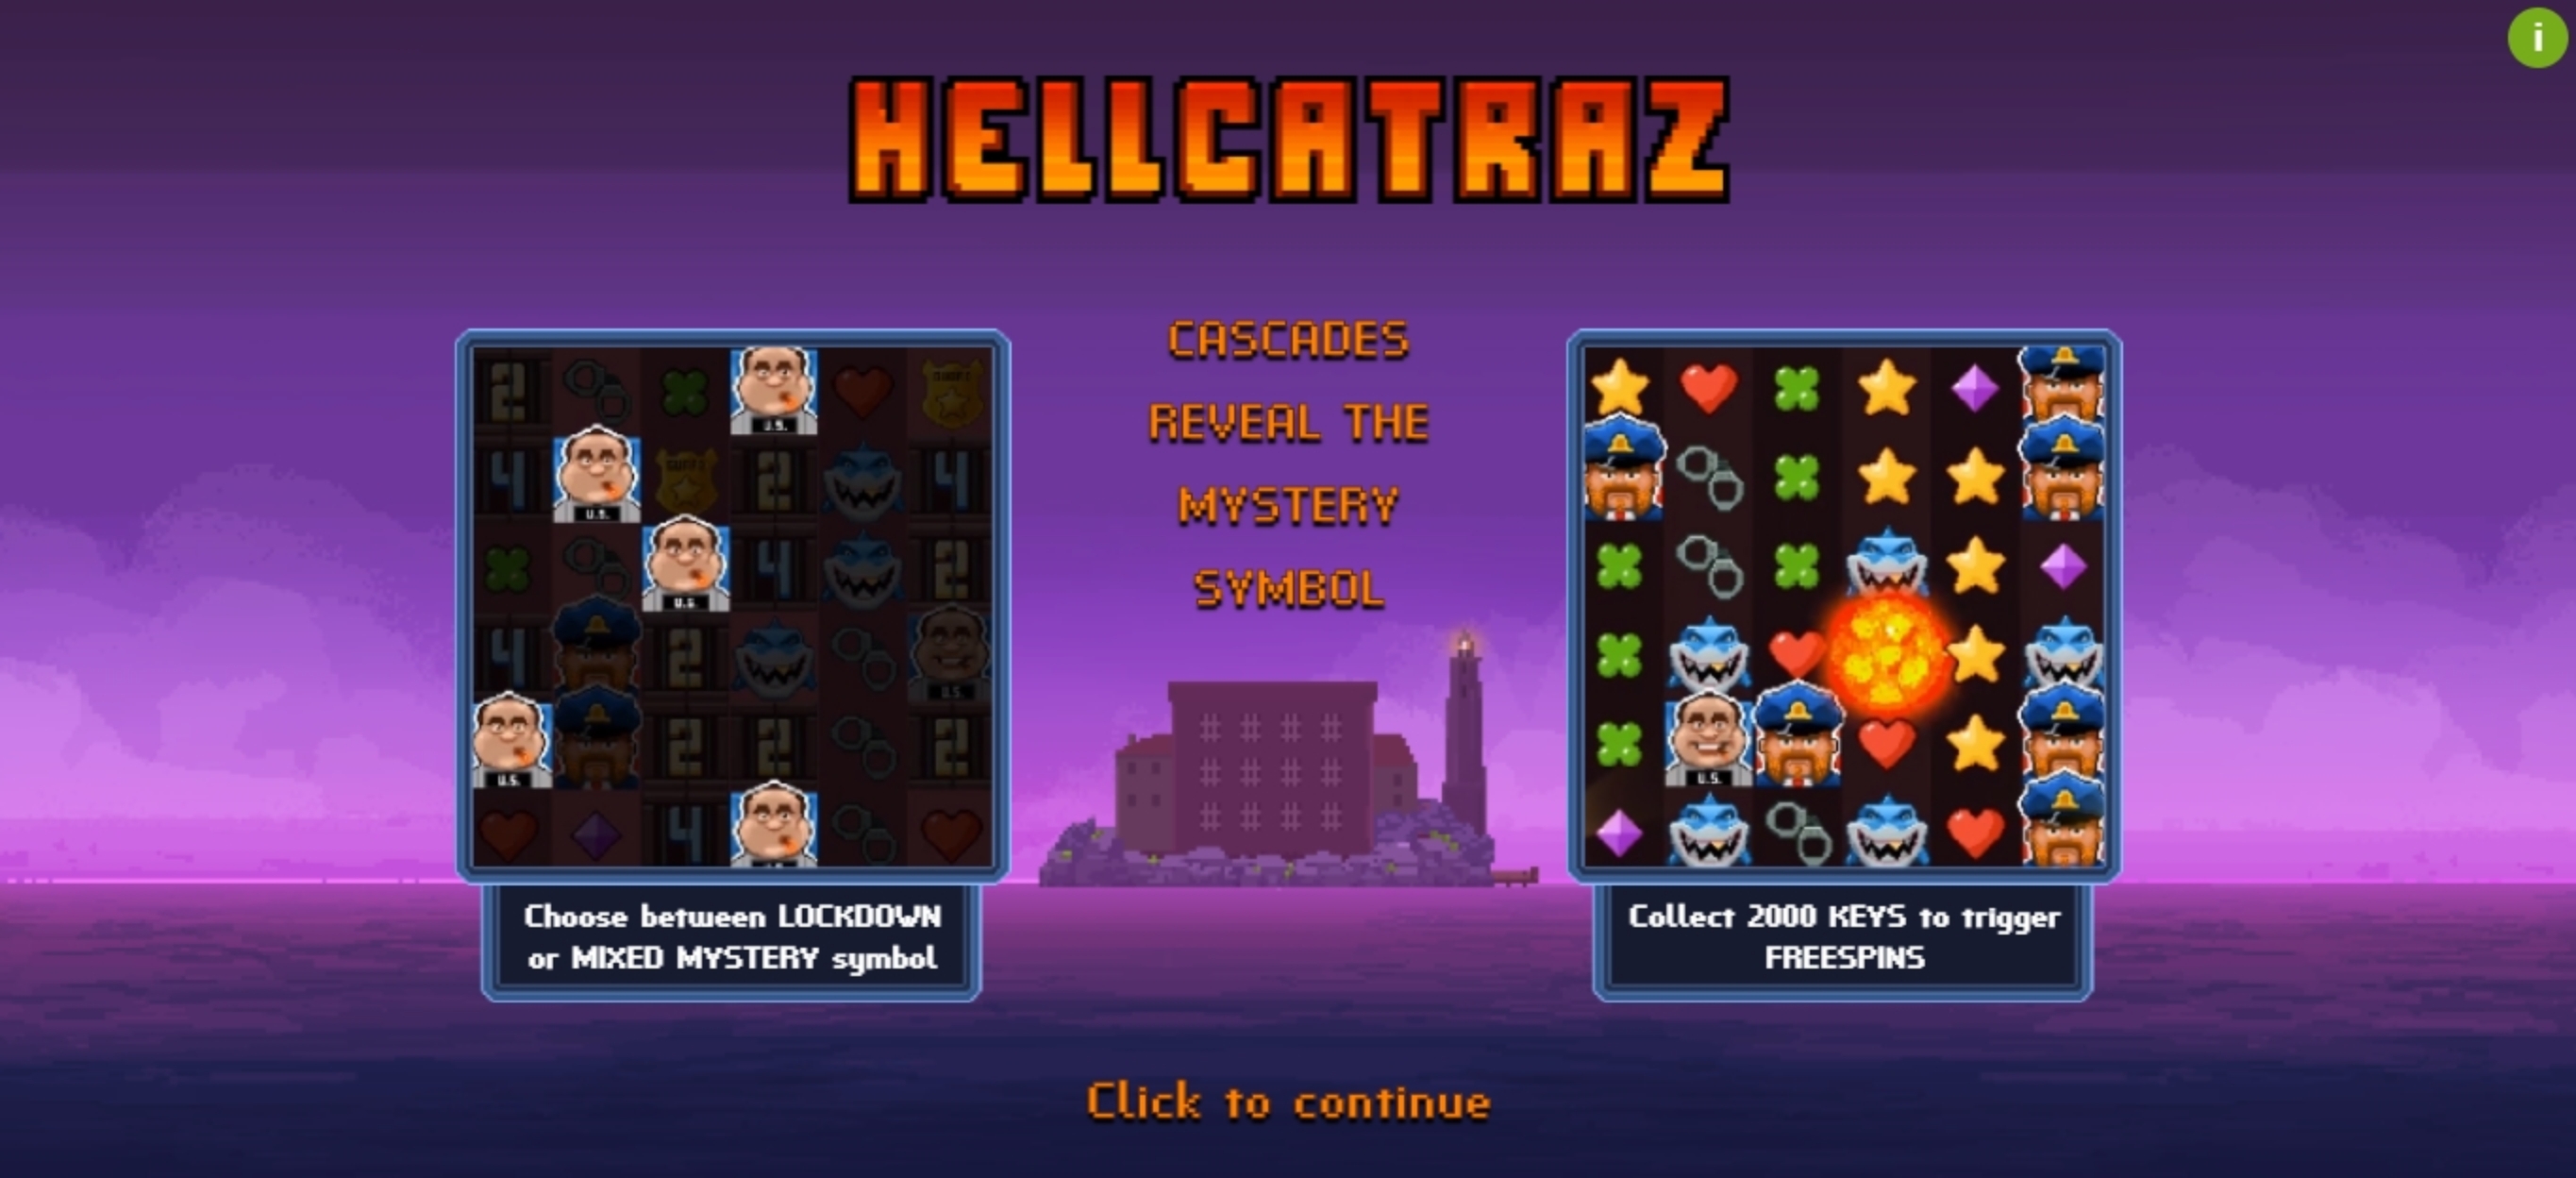 Play Hellcatraz Free Casino Slot Game by Relax Gaming